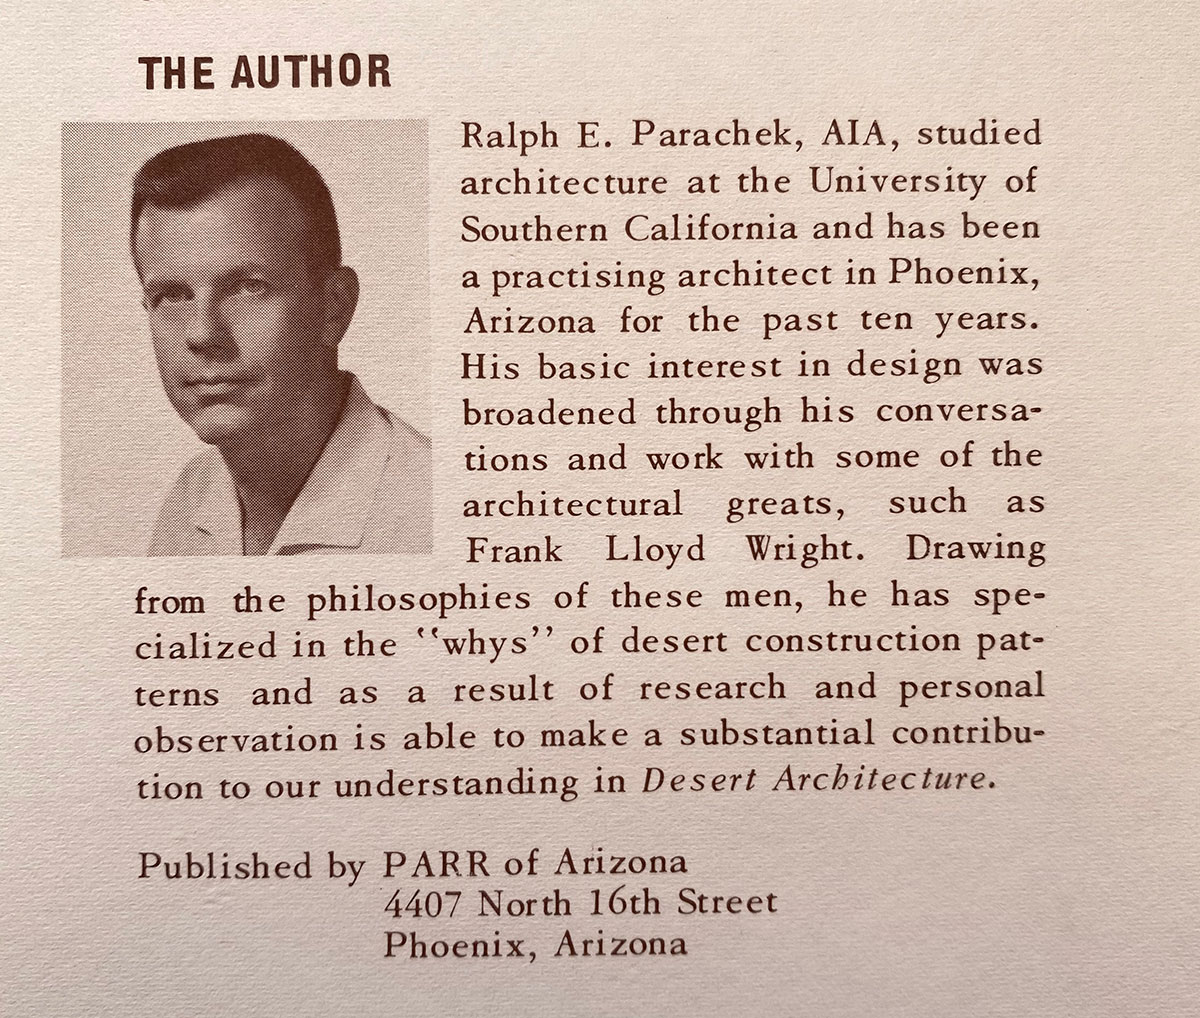 Portrait and brief biography of Ralph Paracek